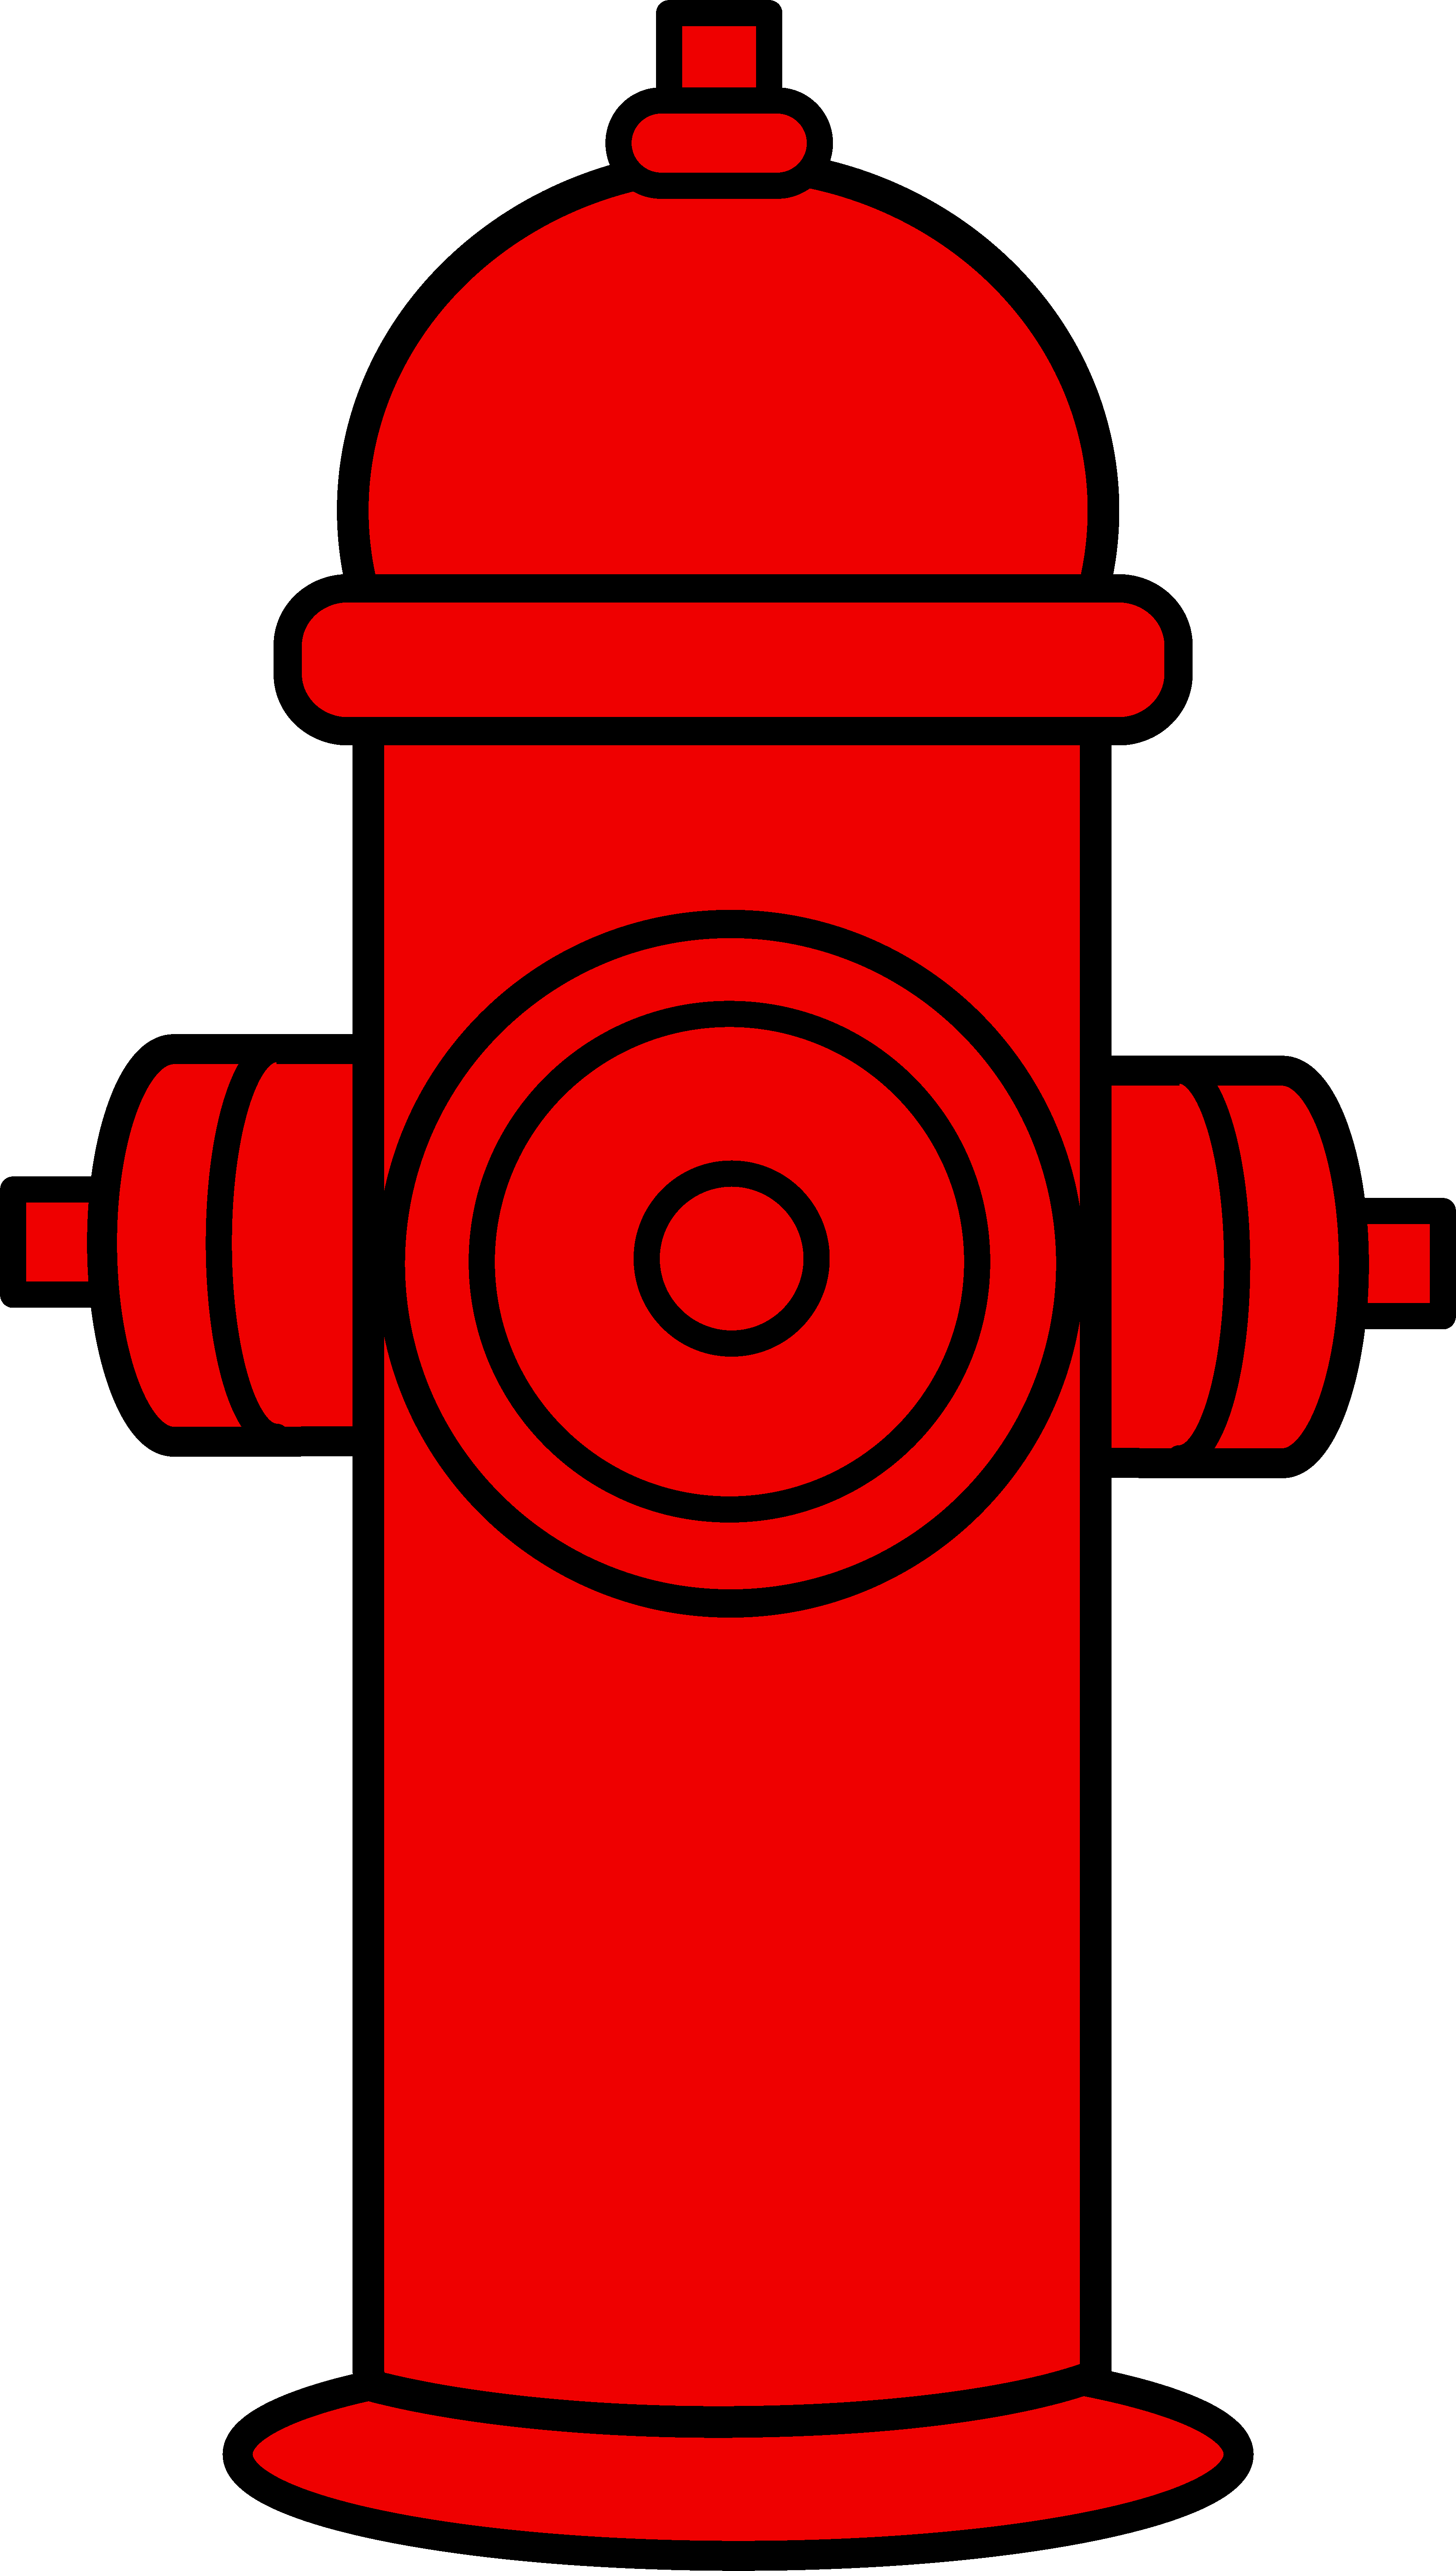 Red hydrant kub ek. Firetruck clipart fire safety